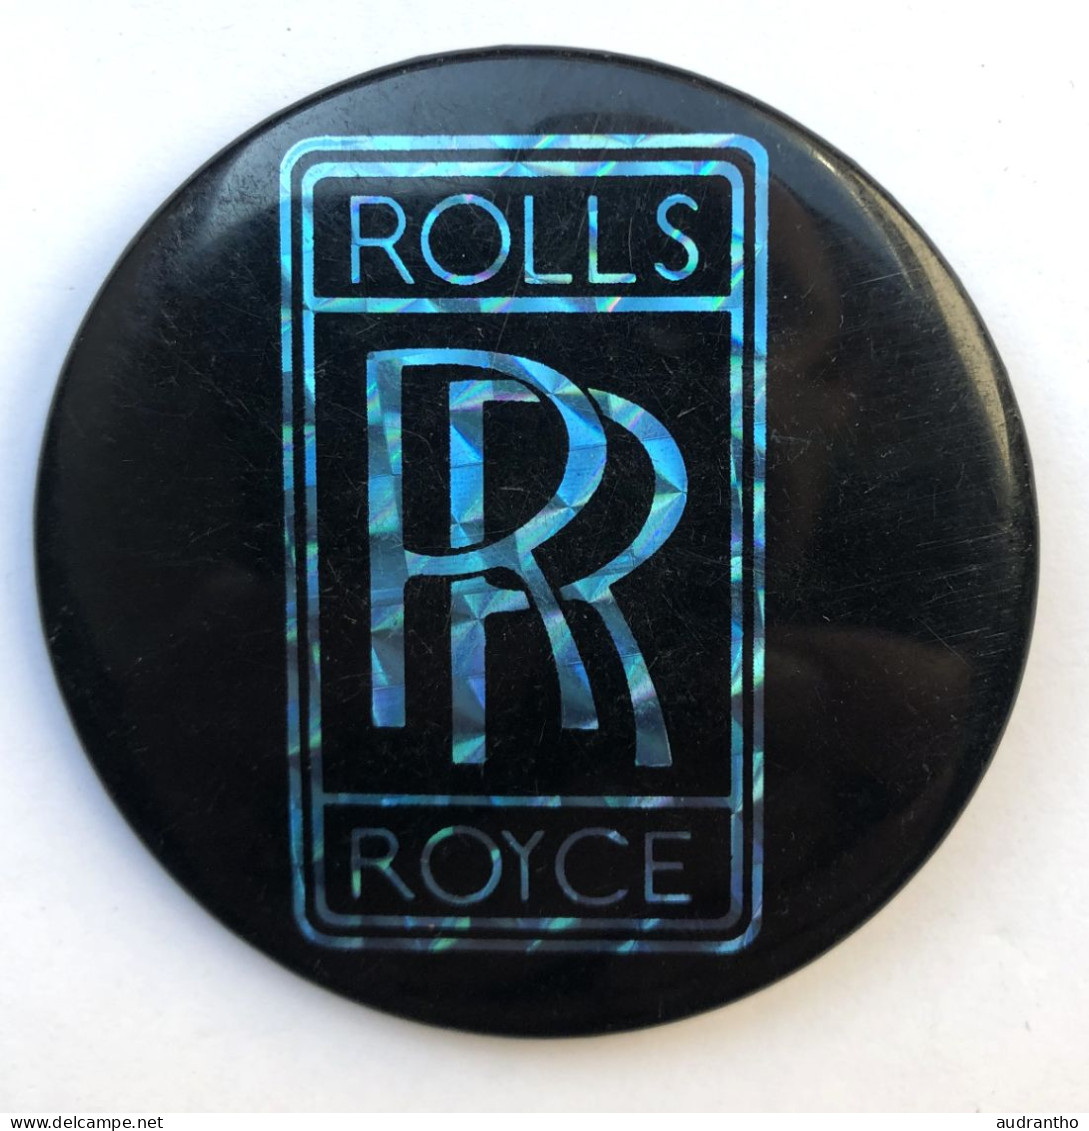 Badge Vintage - Automobile ROLLS ROYCE - Voitures